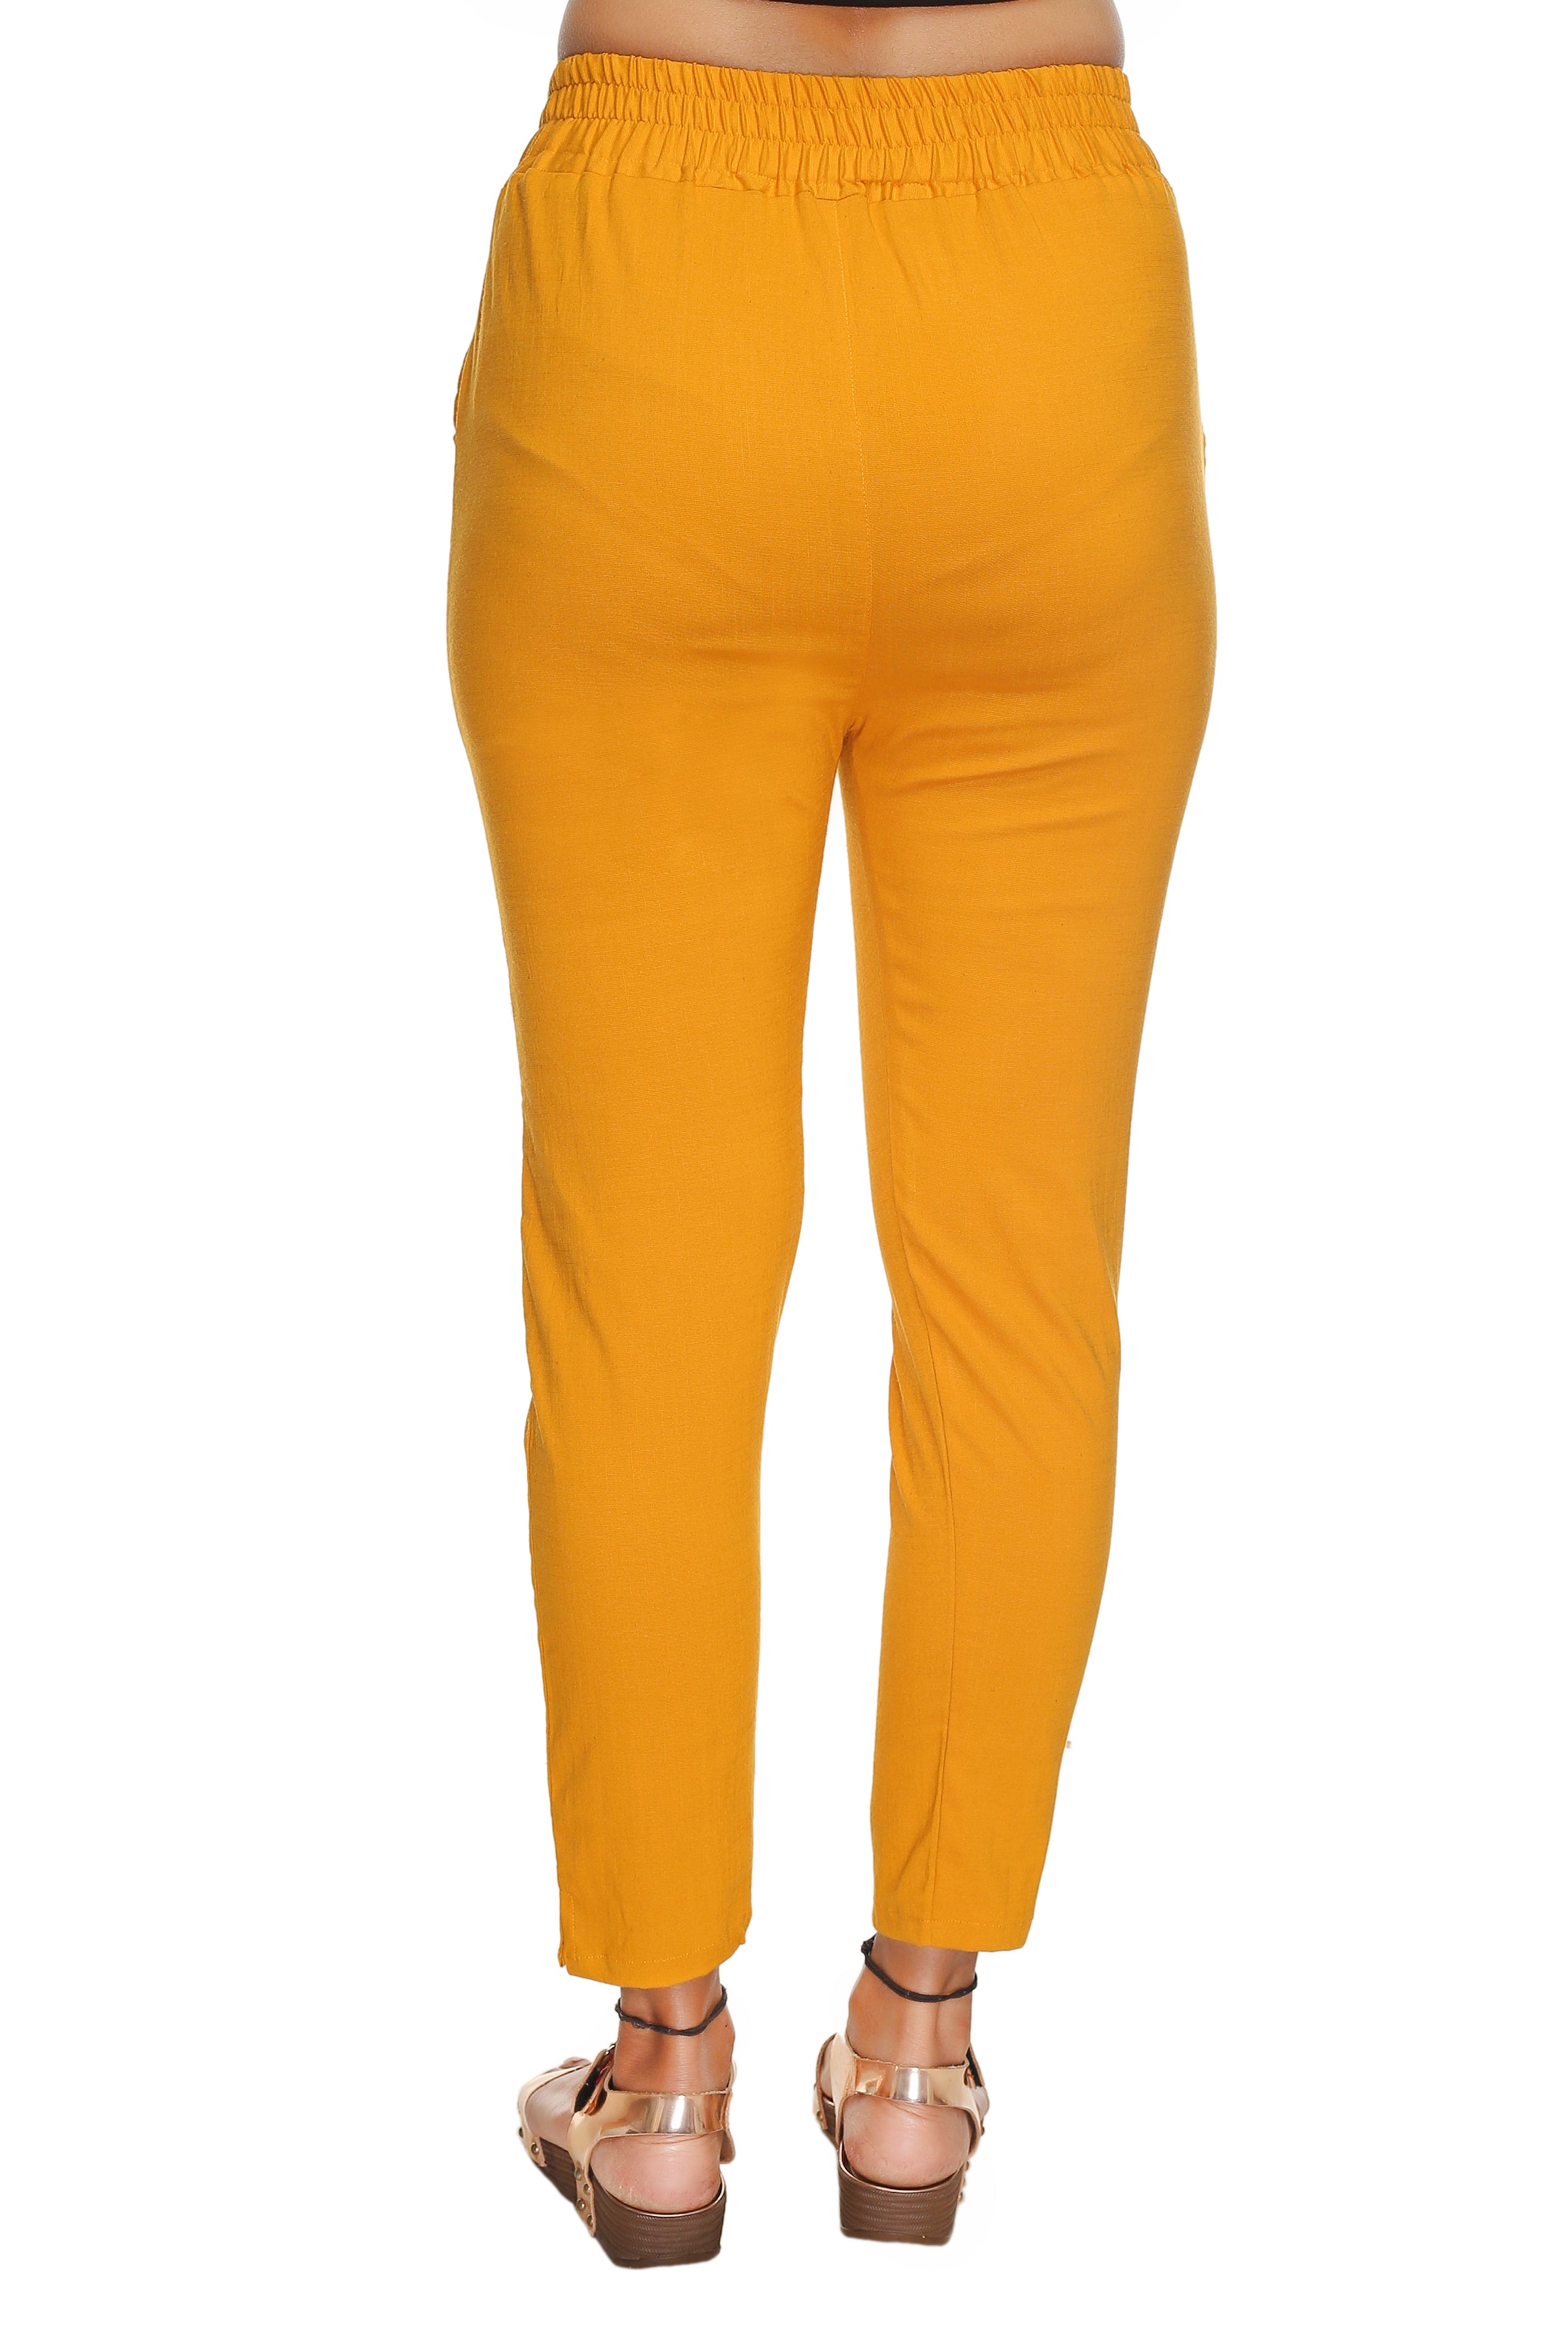 Buy INDYA Yellow Mustard Silk Cigarette Pants | Shoppers Stop